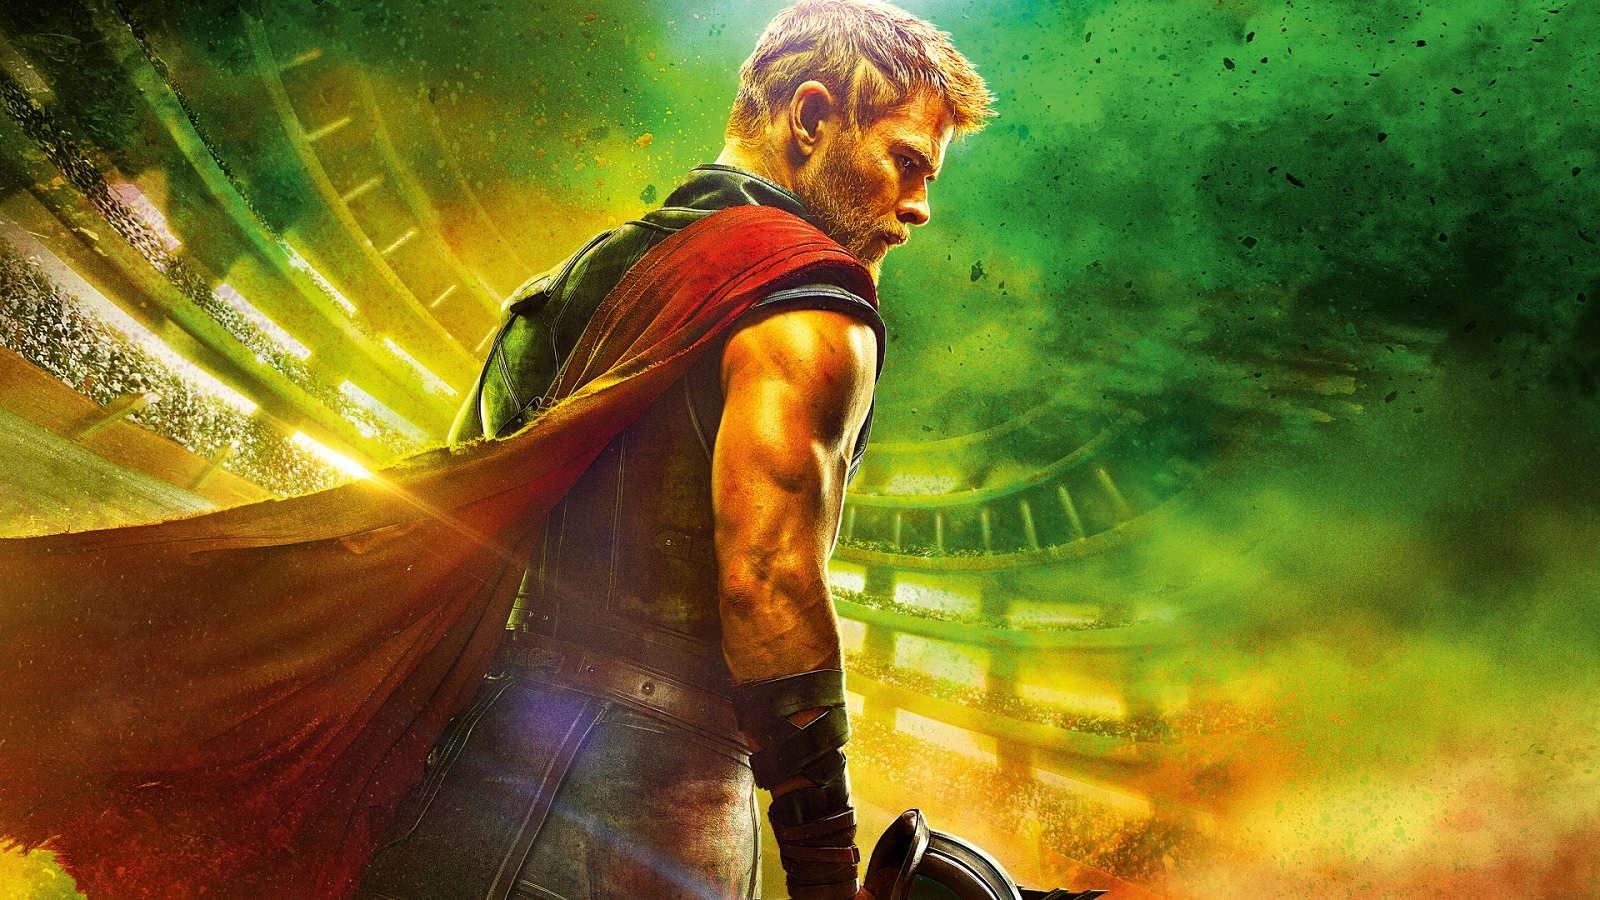 download Thor: Ragnarok free